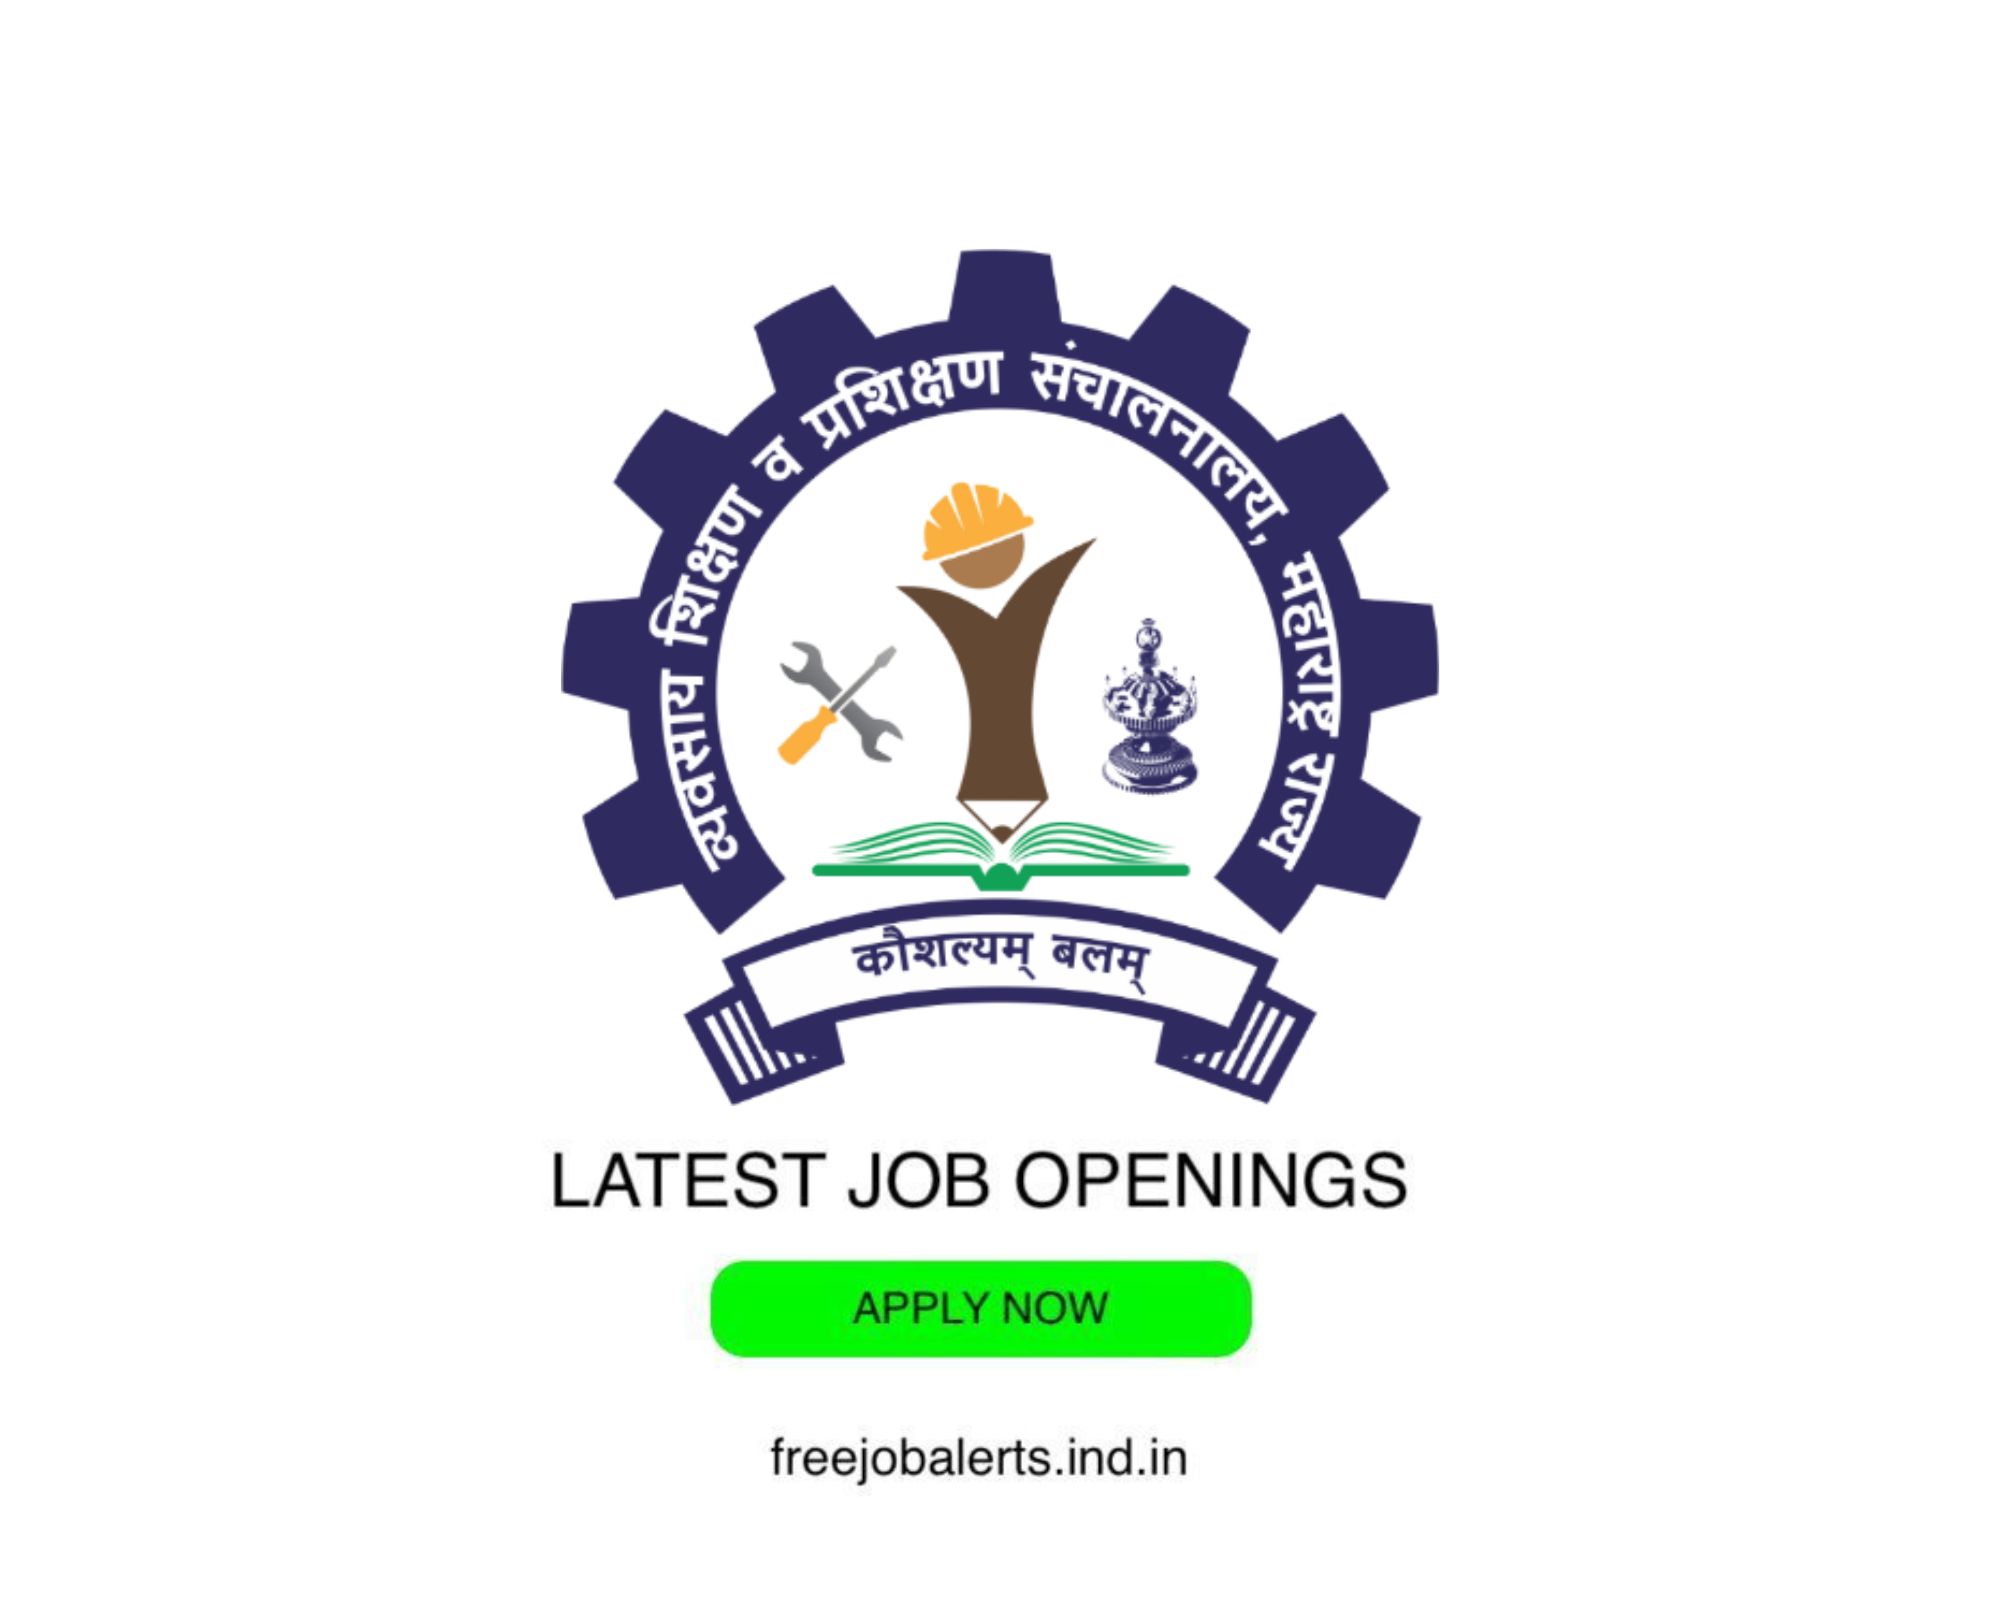 DVET - Directorate of Vocational Education & Training - Latest Govt job openings - Free job alerts, Indian Govt Jobs